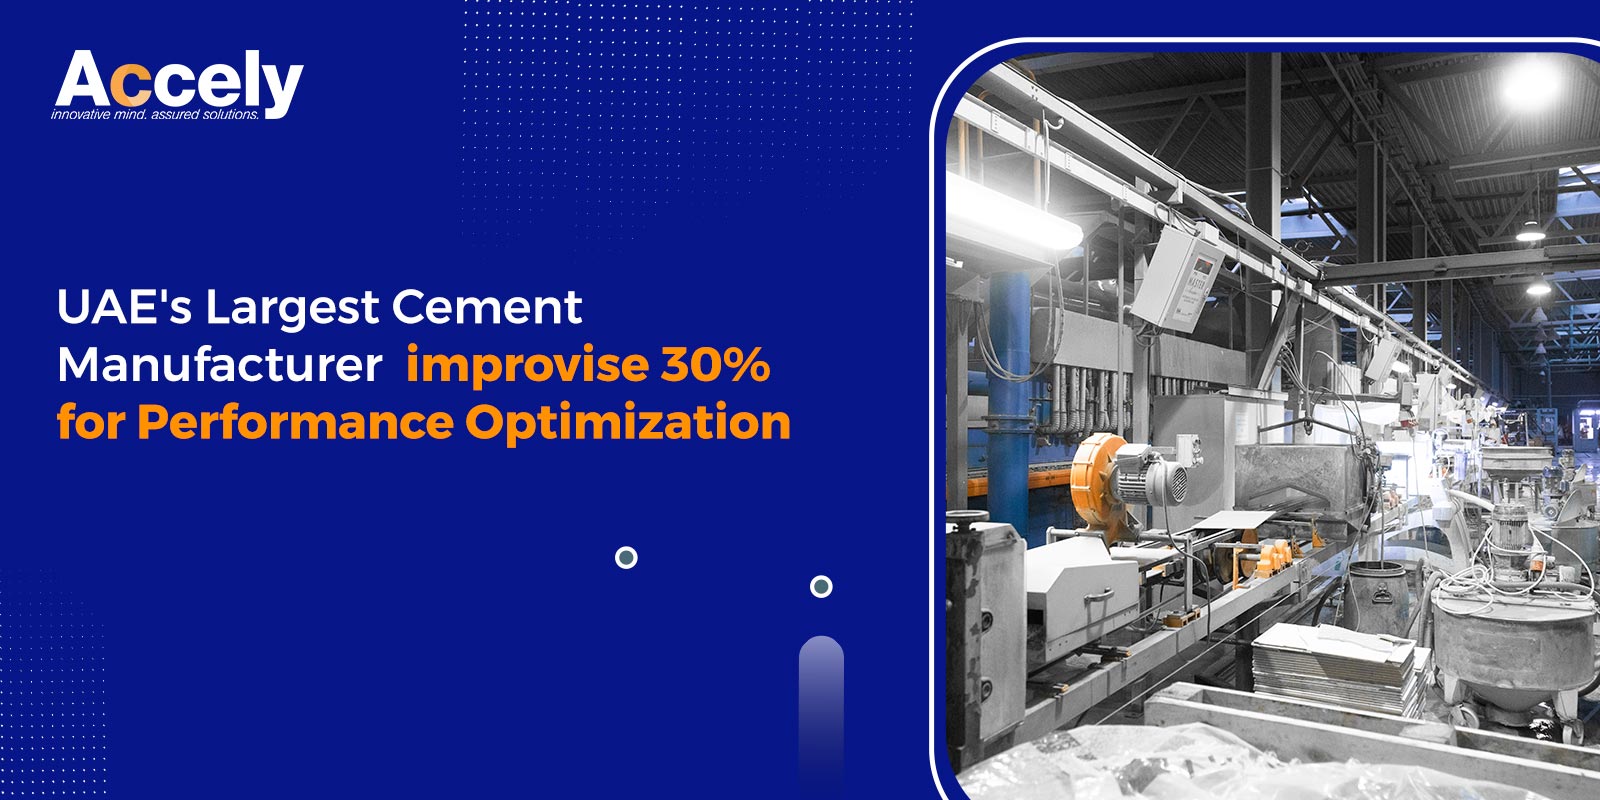 UAE's Largest Cement Manufacturer improvise 30% for Performance Optimization